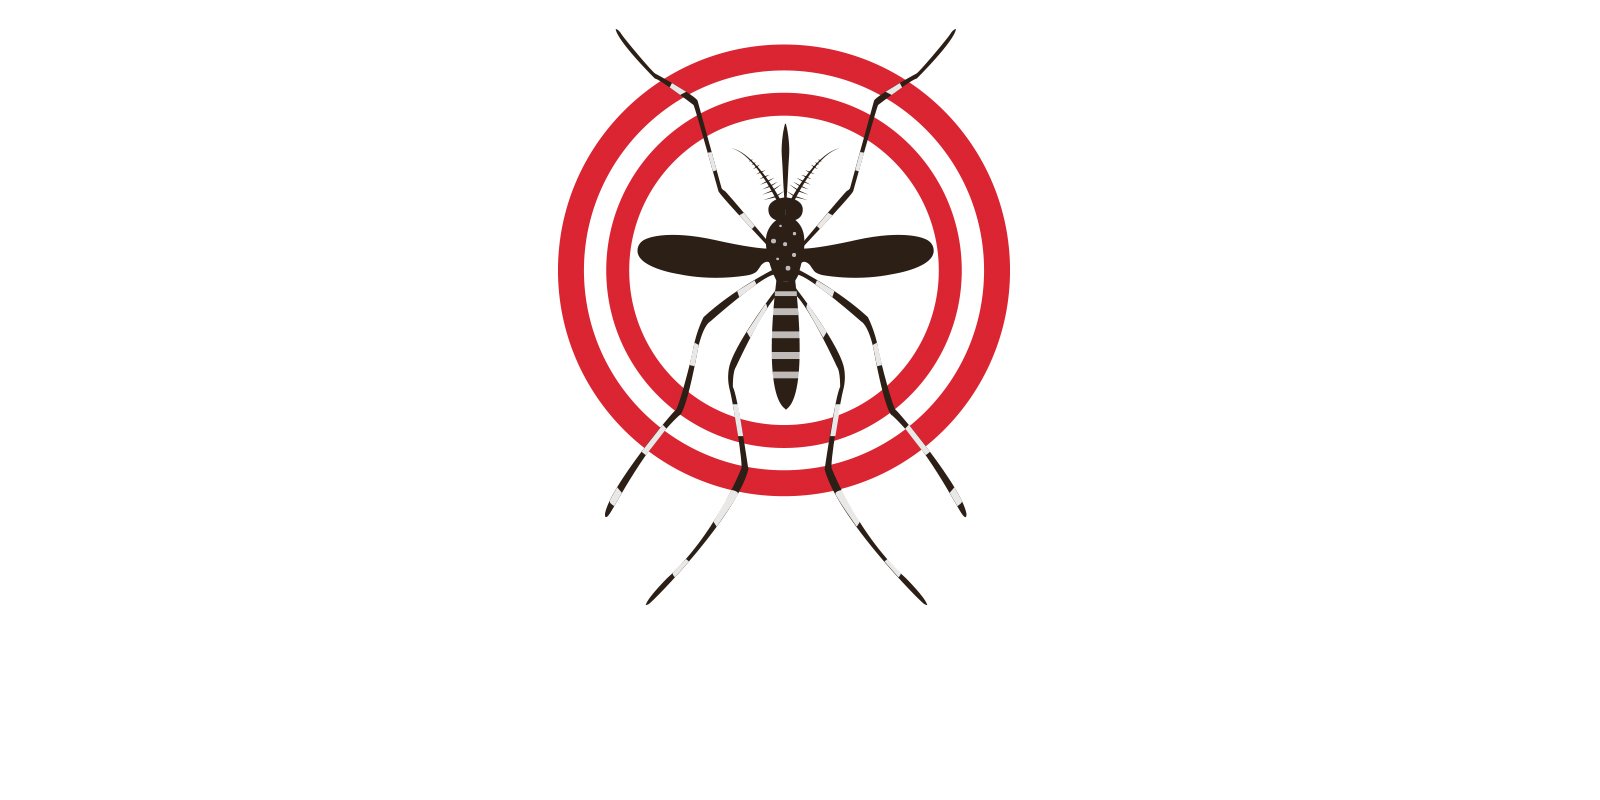 Featured image for “Dengue e Chikungunya”